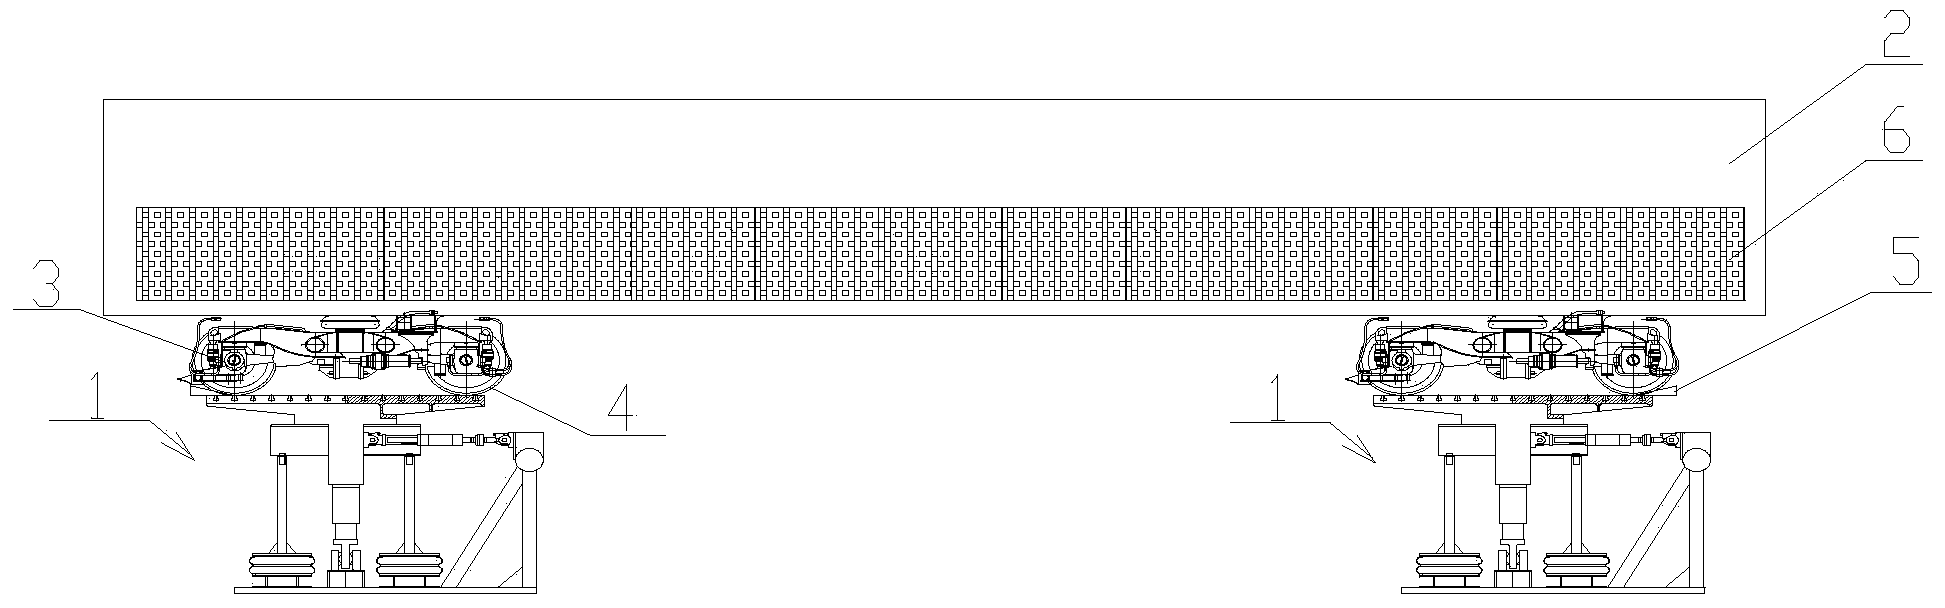 Rail vehicle curve passage capacity testing method